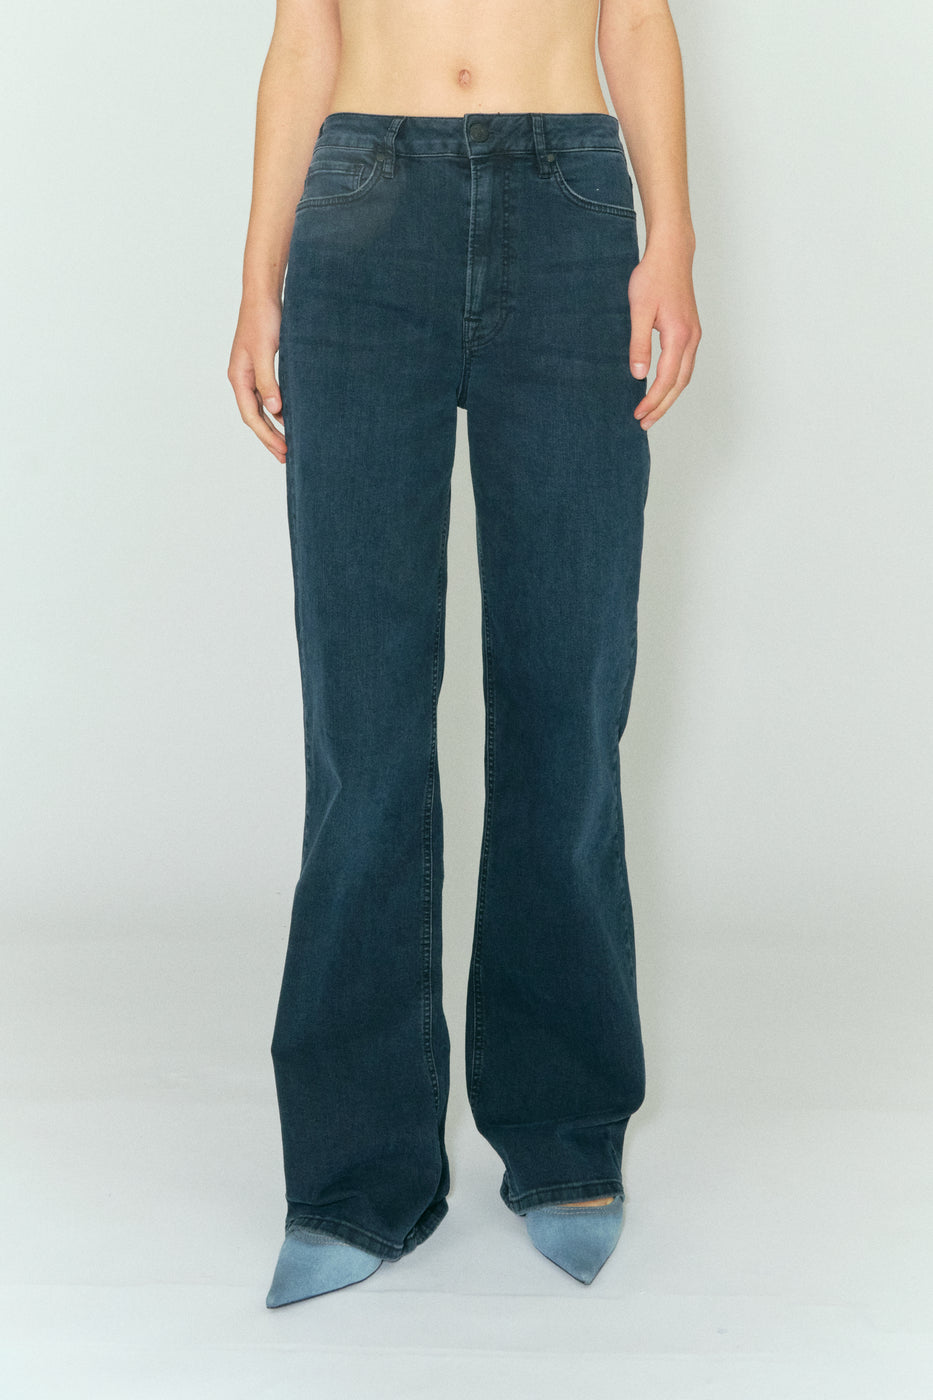 Tomorrow TRW-Brown Jeans Wash Austin Jeans & Pants 51 Denim Blue